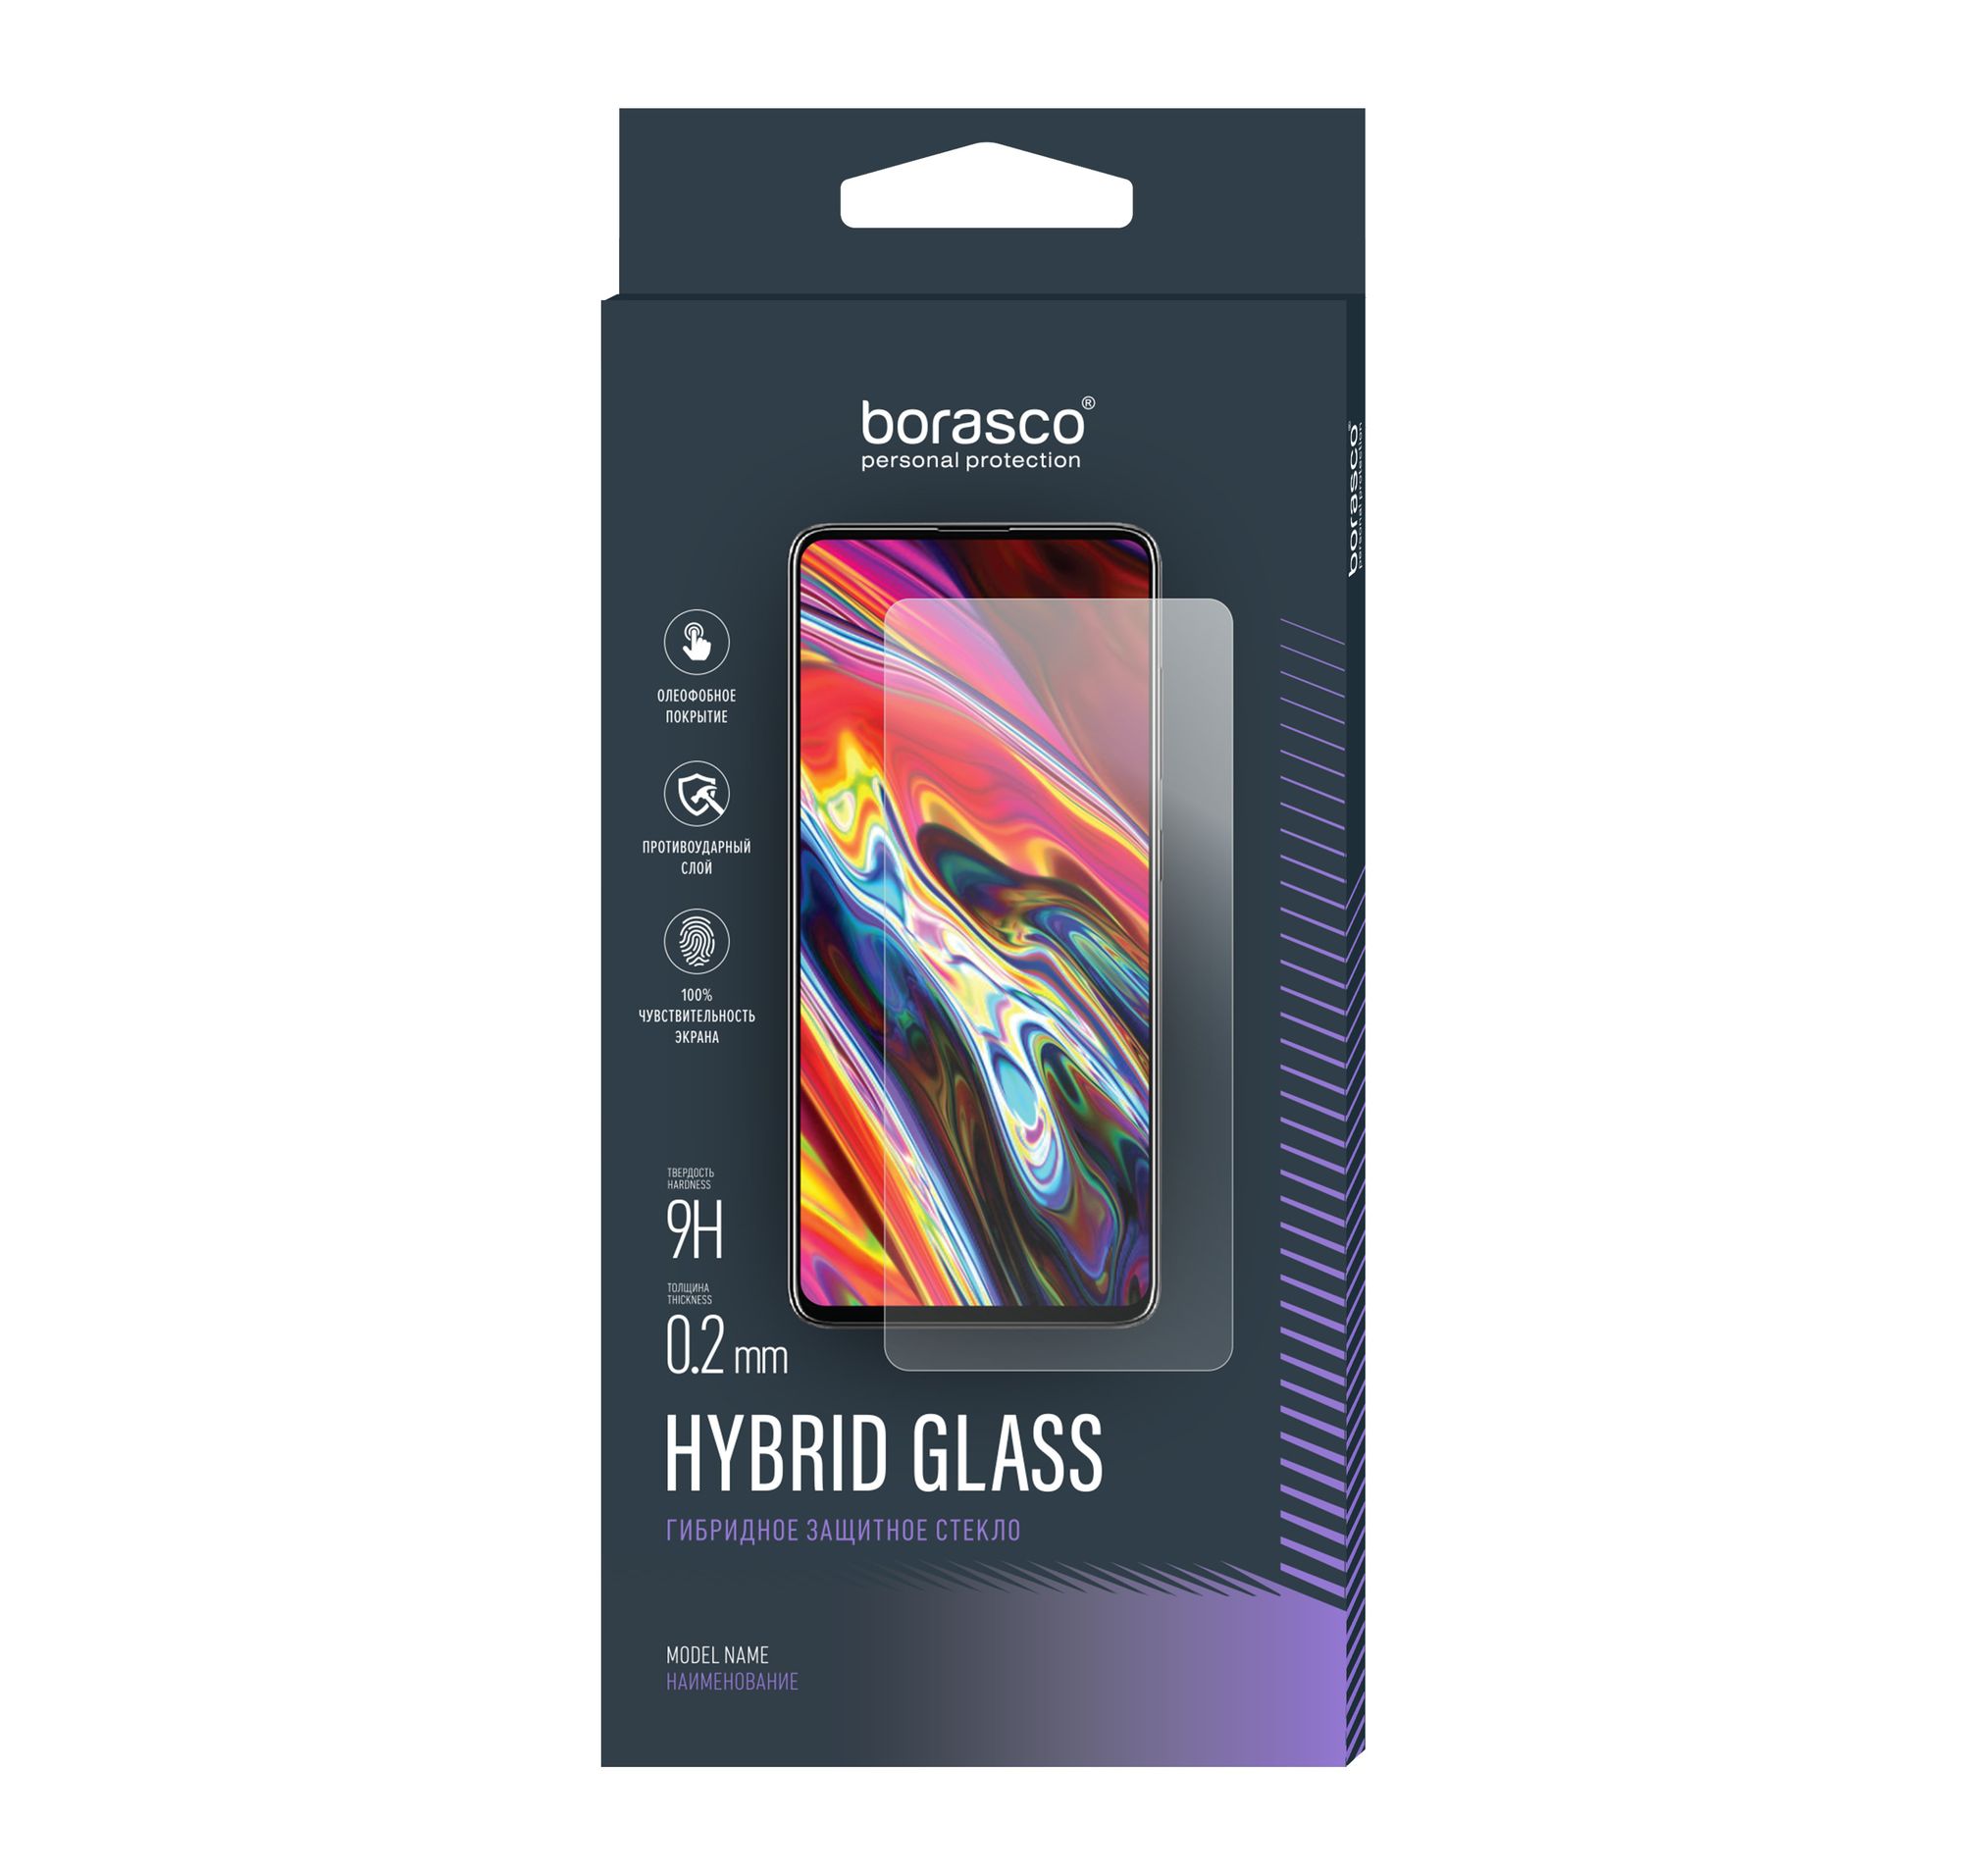 Стекло защитное Hybrid Glass VSP 0,26 мм для OPPO RENO Z стекло защитное krutoff для oppo reno z 22168